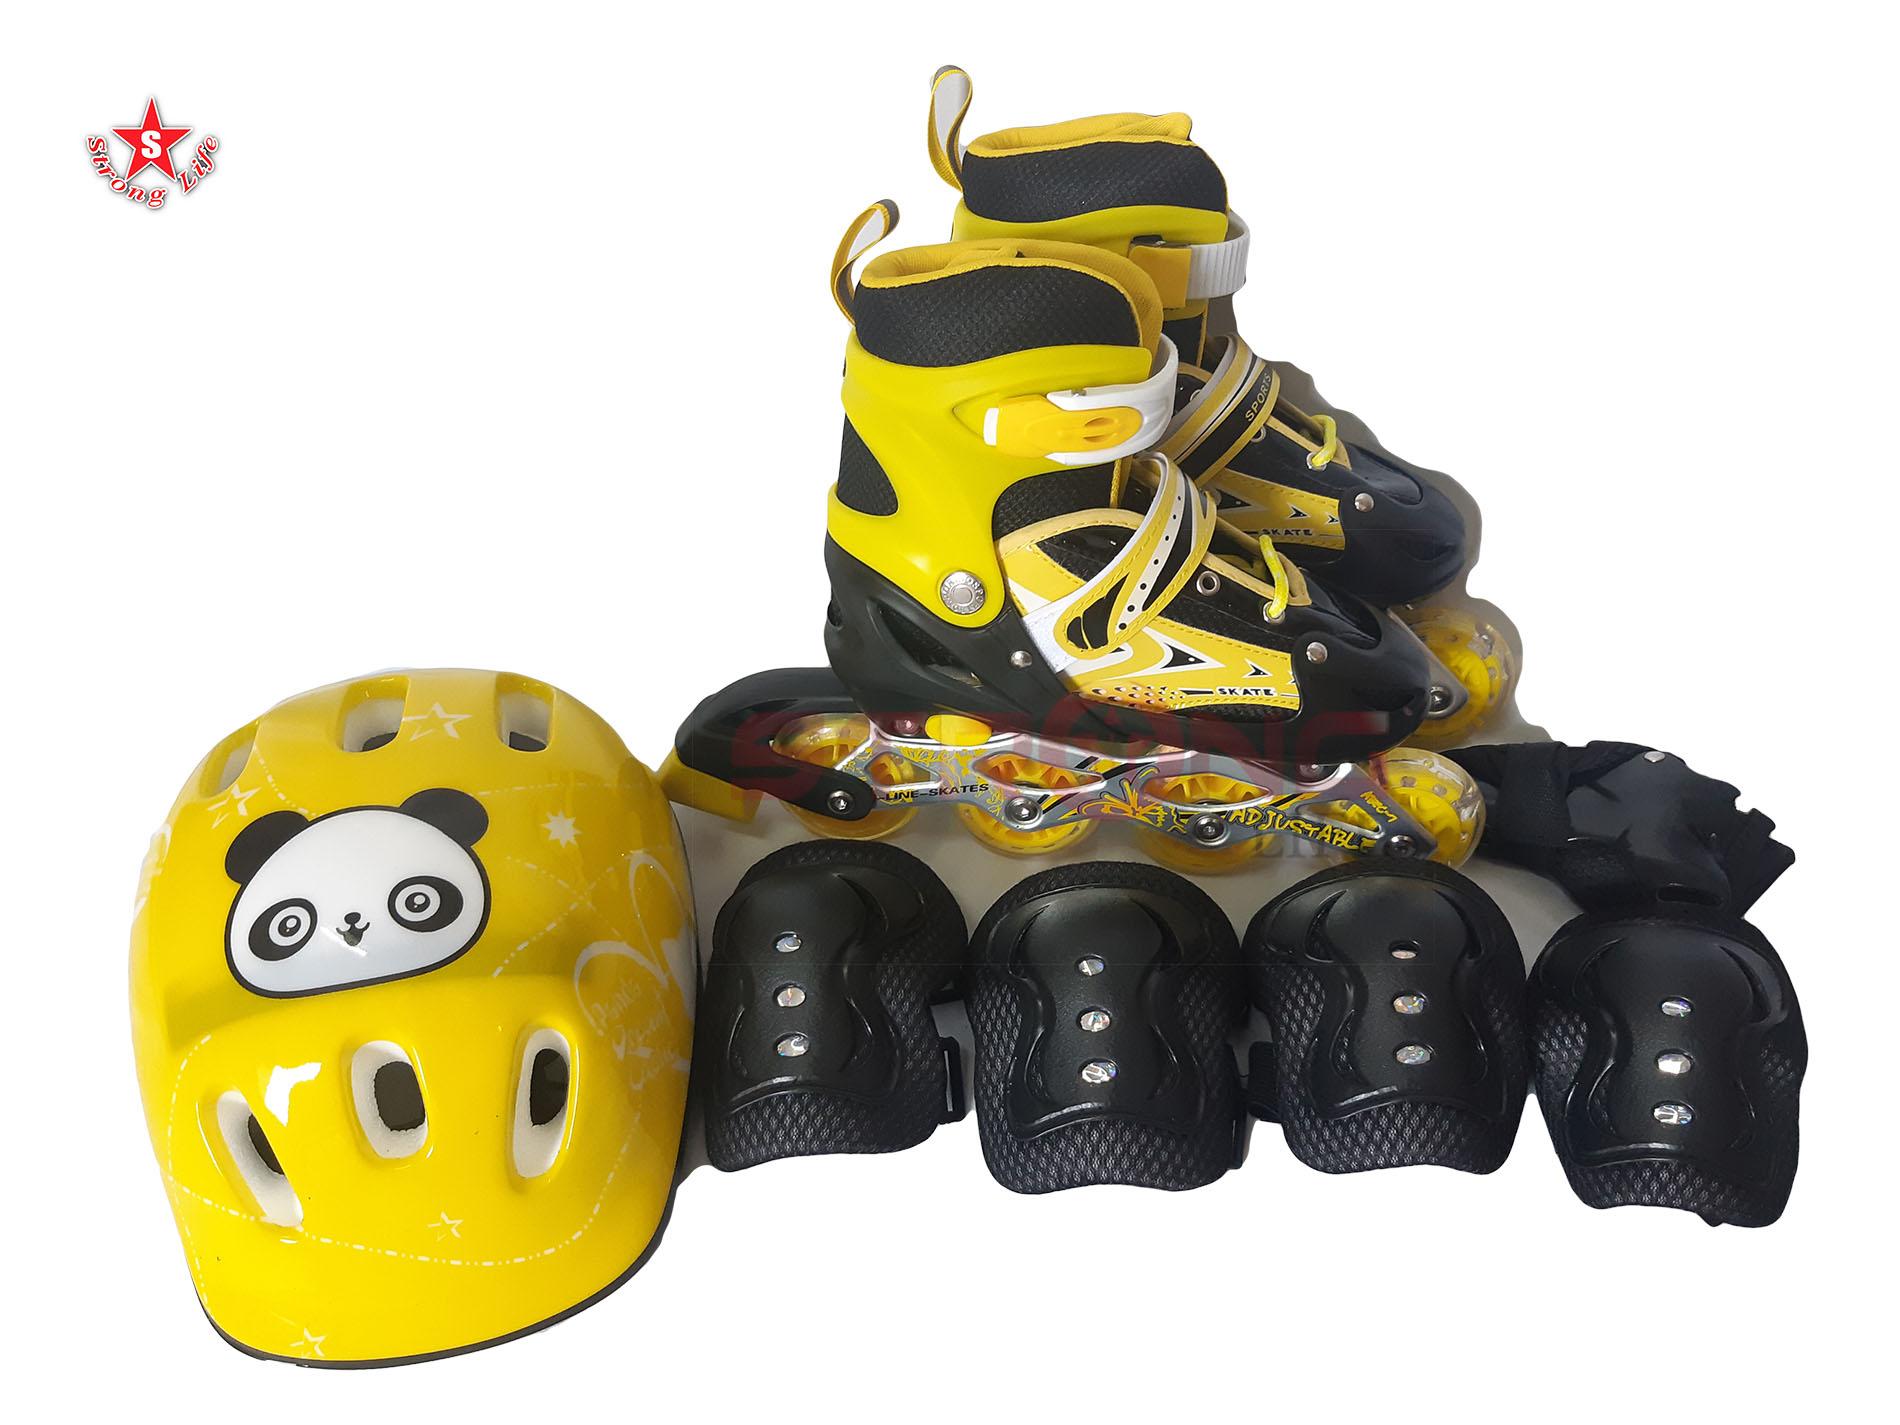 SKA รองเท้าสเก็ต โรลเลอร์เบลด โรลเลอร์สเก็ต Roller Blade ไซต์ M/L ฟรีของแถมอุปกรณ์ป้องกัน kid มูลค่า 200 บาท